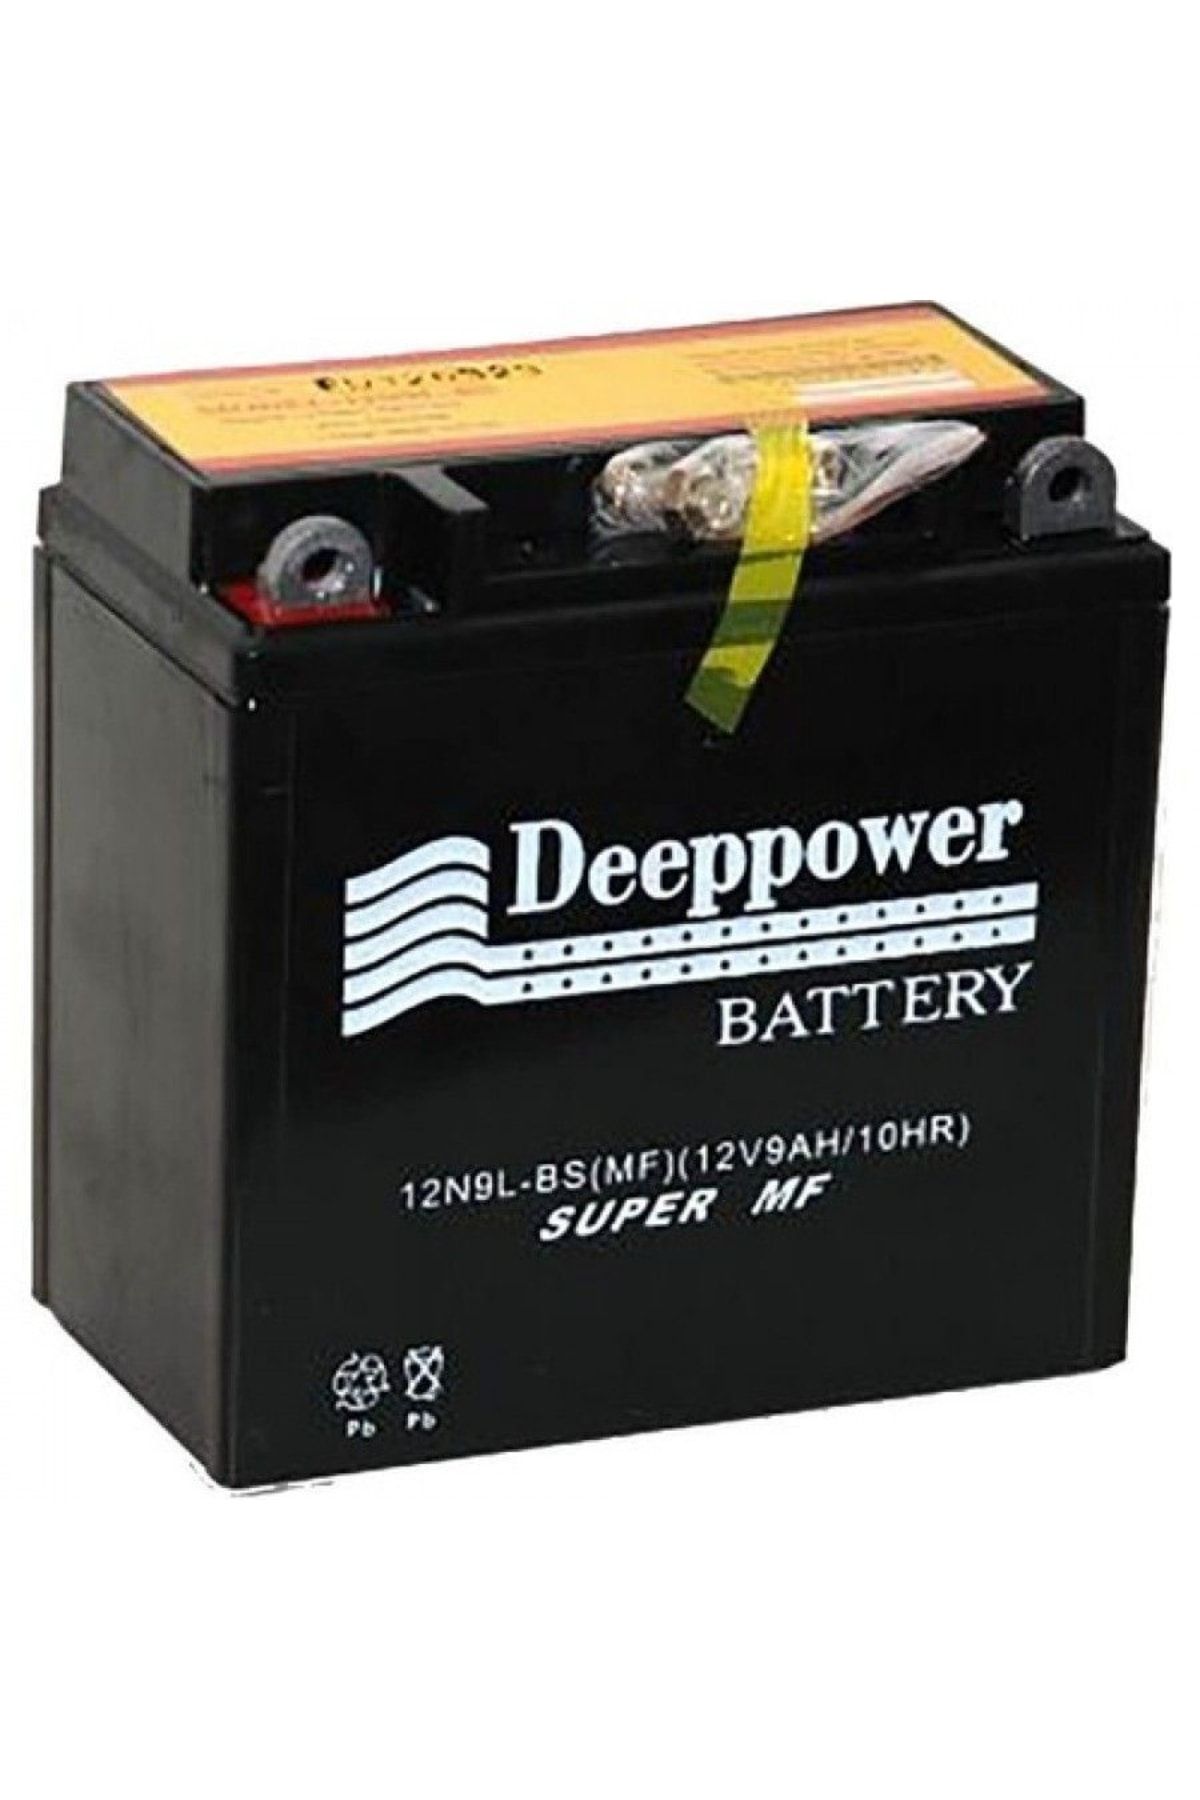 DEEPPOWER Deep Power Motorsiklet Aküsü 12n9l-bs (12v9ah/10hr)dik Motor Aküs